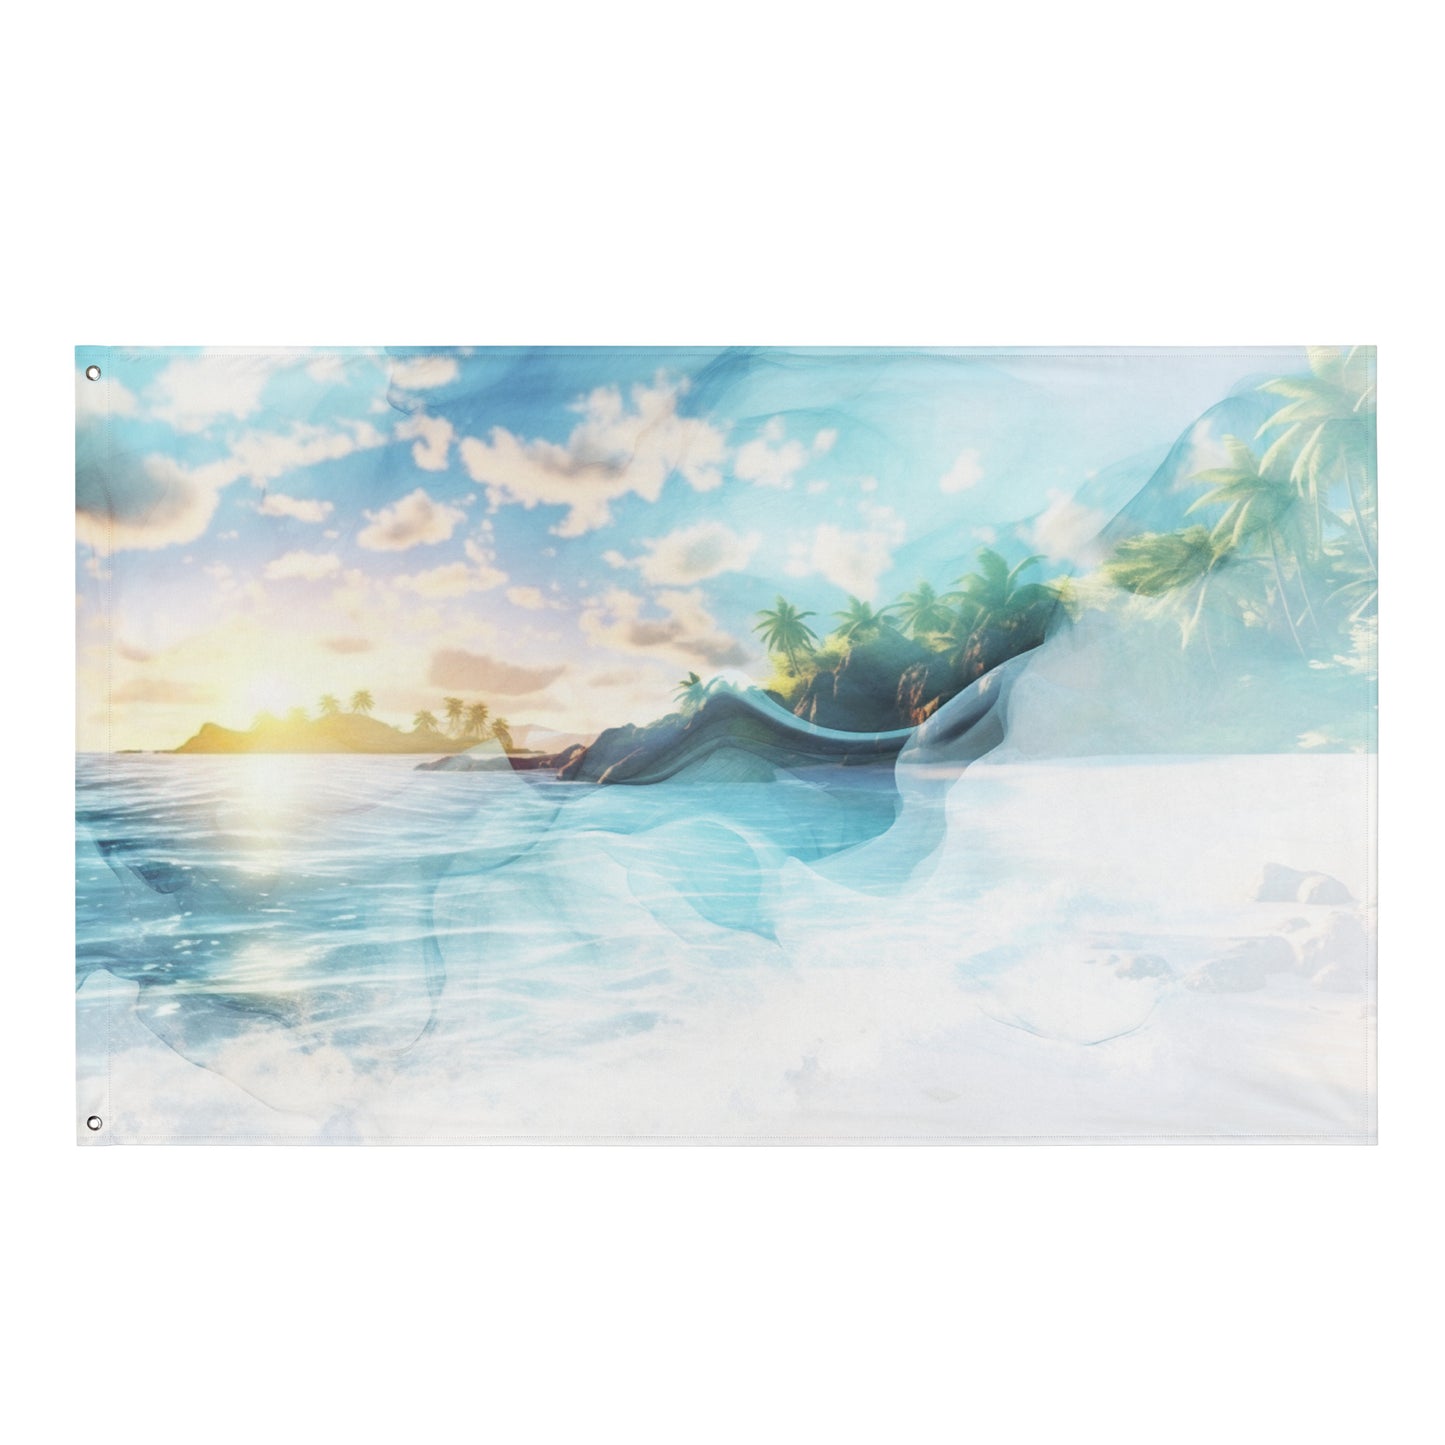 Vivid Dreams Tropical Beach Wall Flag - Dreamscape Collection by Neduz Designs